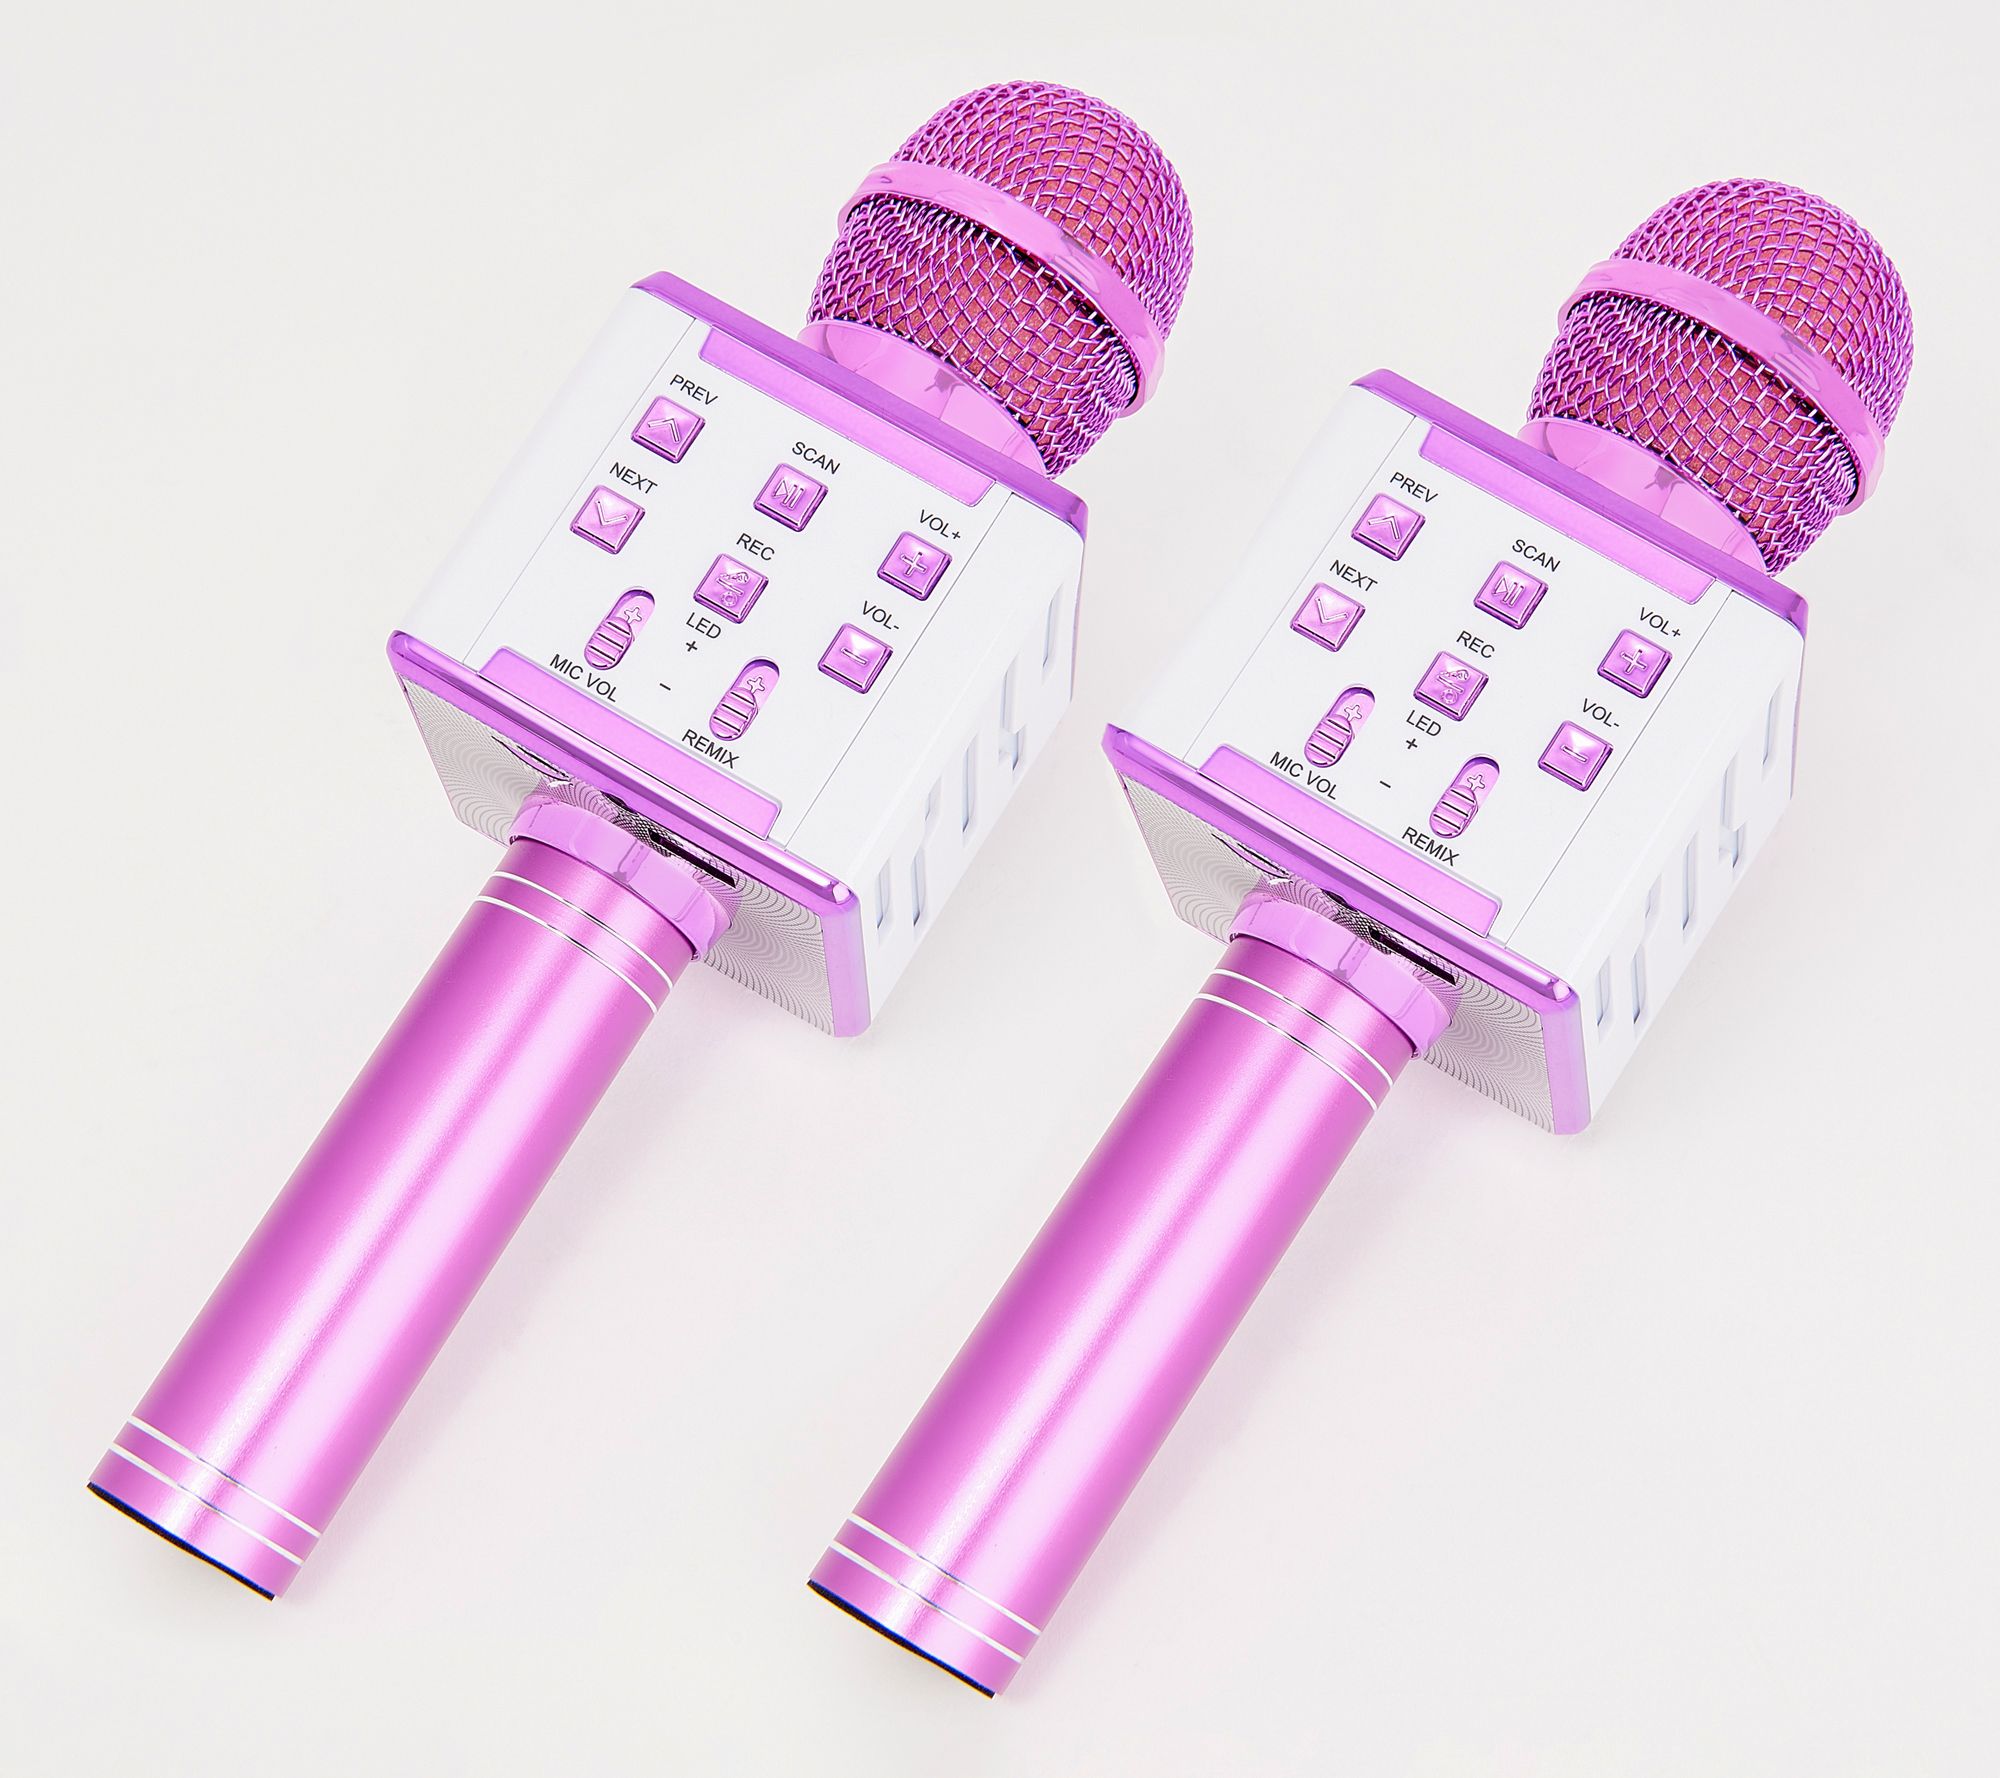 Microphone bluetooth spécial karaoké, Microphones